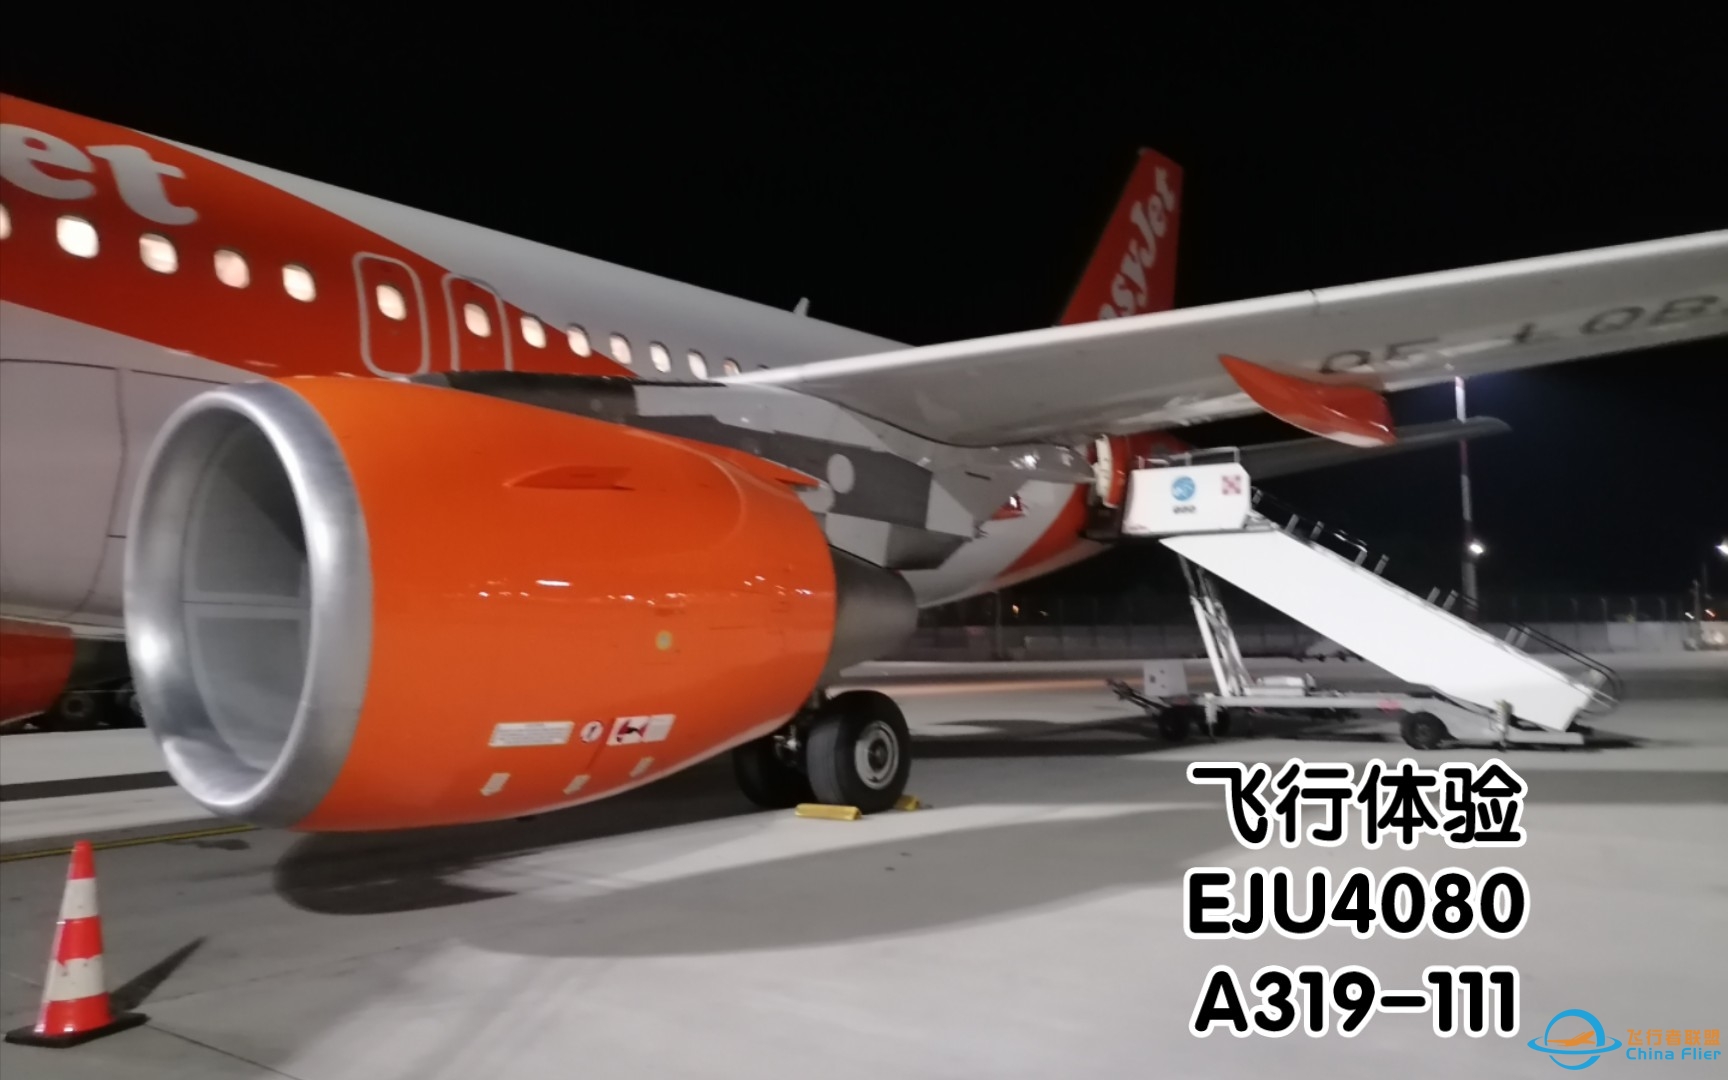 【Flight Vlog】飞友首次进入驾驶舱！易捷航空A319飞行体验-4193 